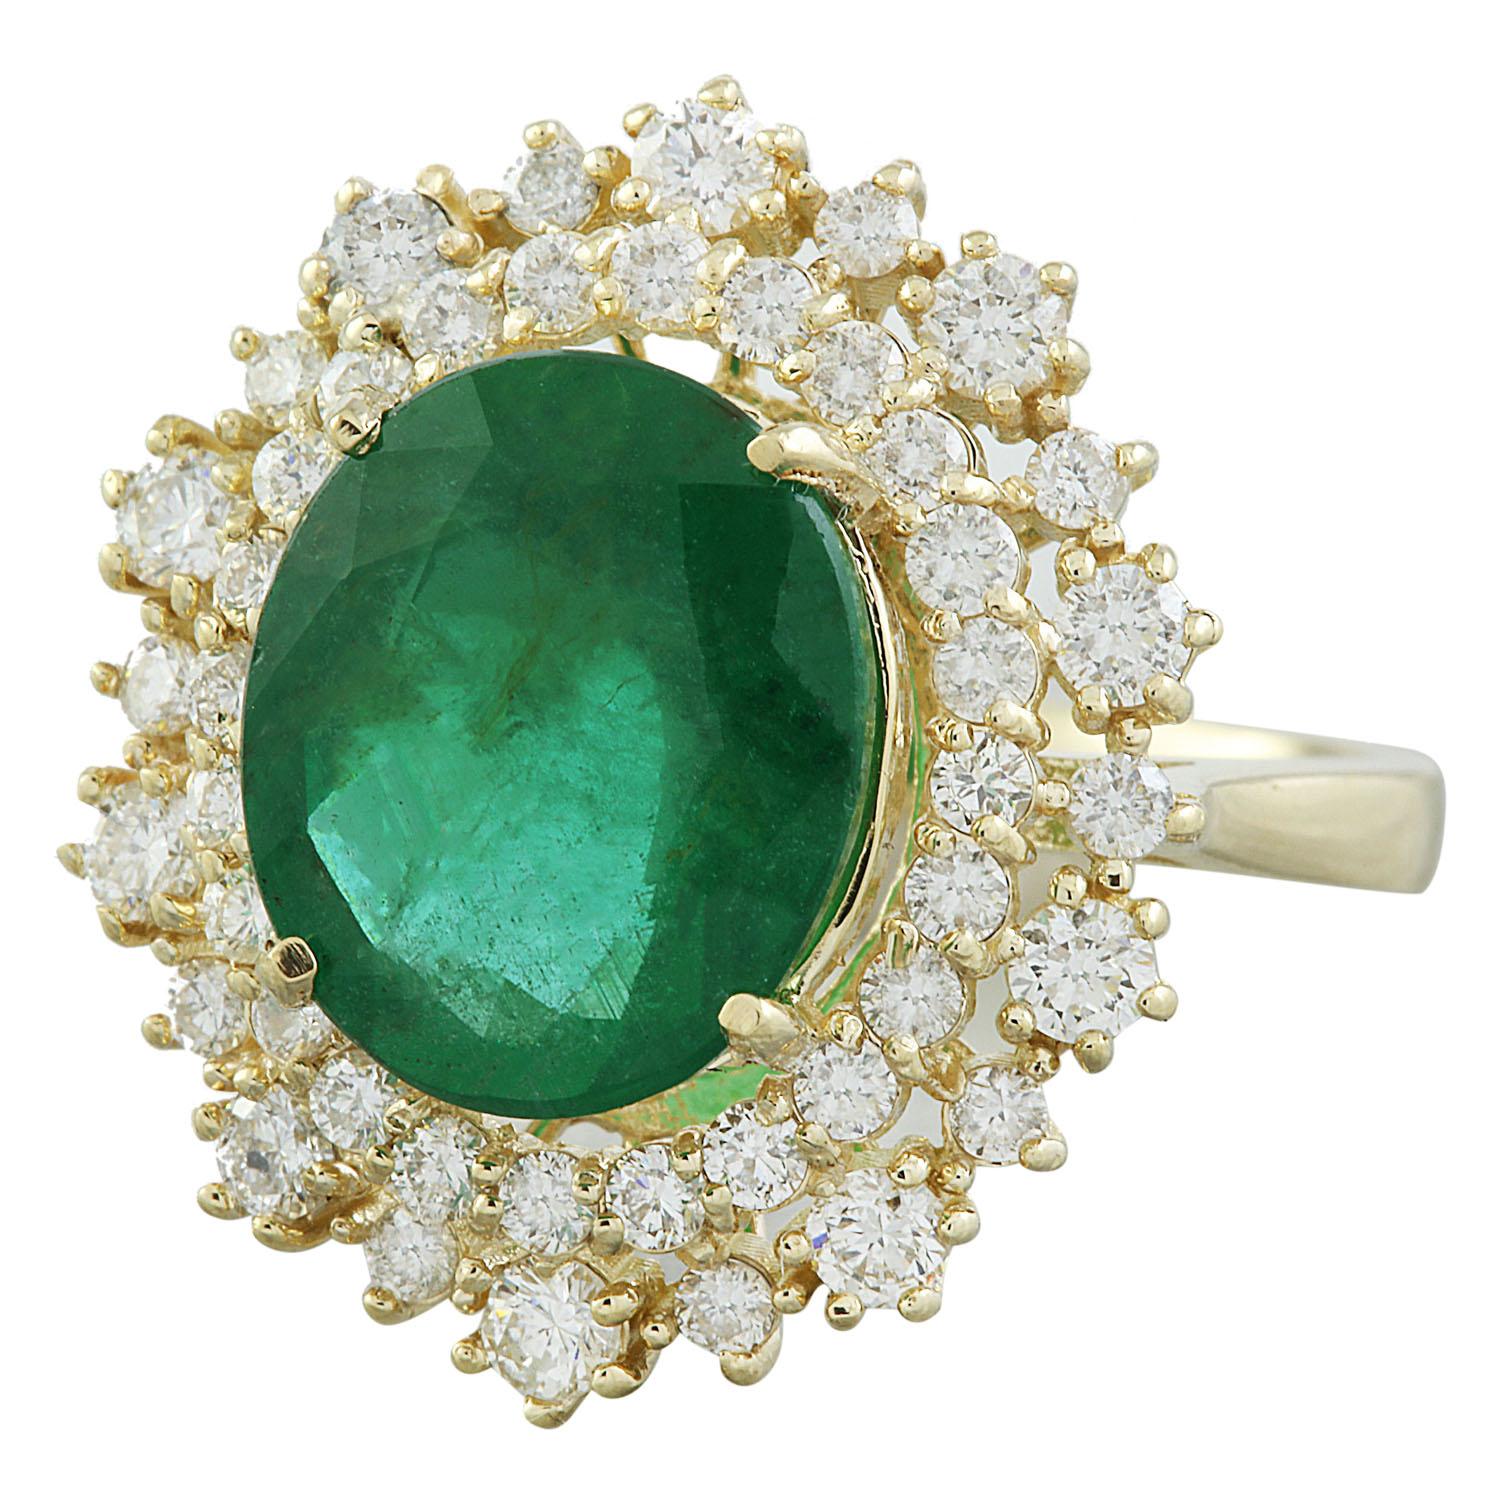 5.93 Carat Natural Emerald 14 Karat Solid Yellow Gold Diamond Ring
Stamped: 14K 
Total Ring Weight: 5.5 Grams 
Emerald Weight 4.83 Carat (12.00x10.00 Millimeters)
Natural Emerald Treatment: Oil Only
Diamond Weight: 1.10 carat (F-G Color, VS2-SI1